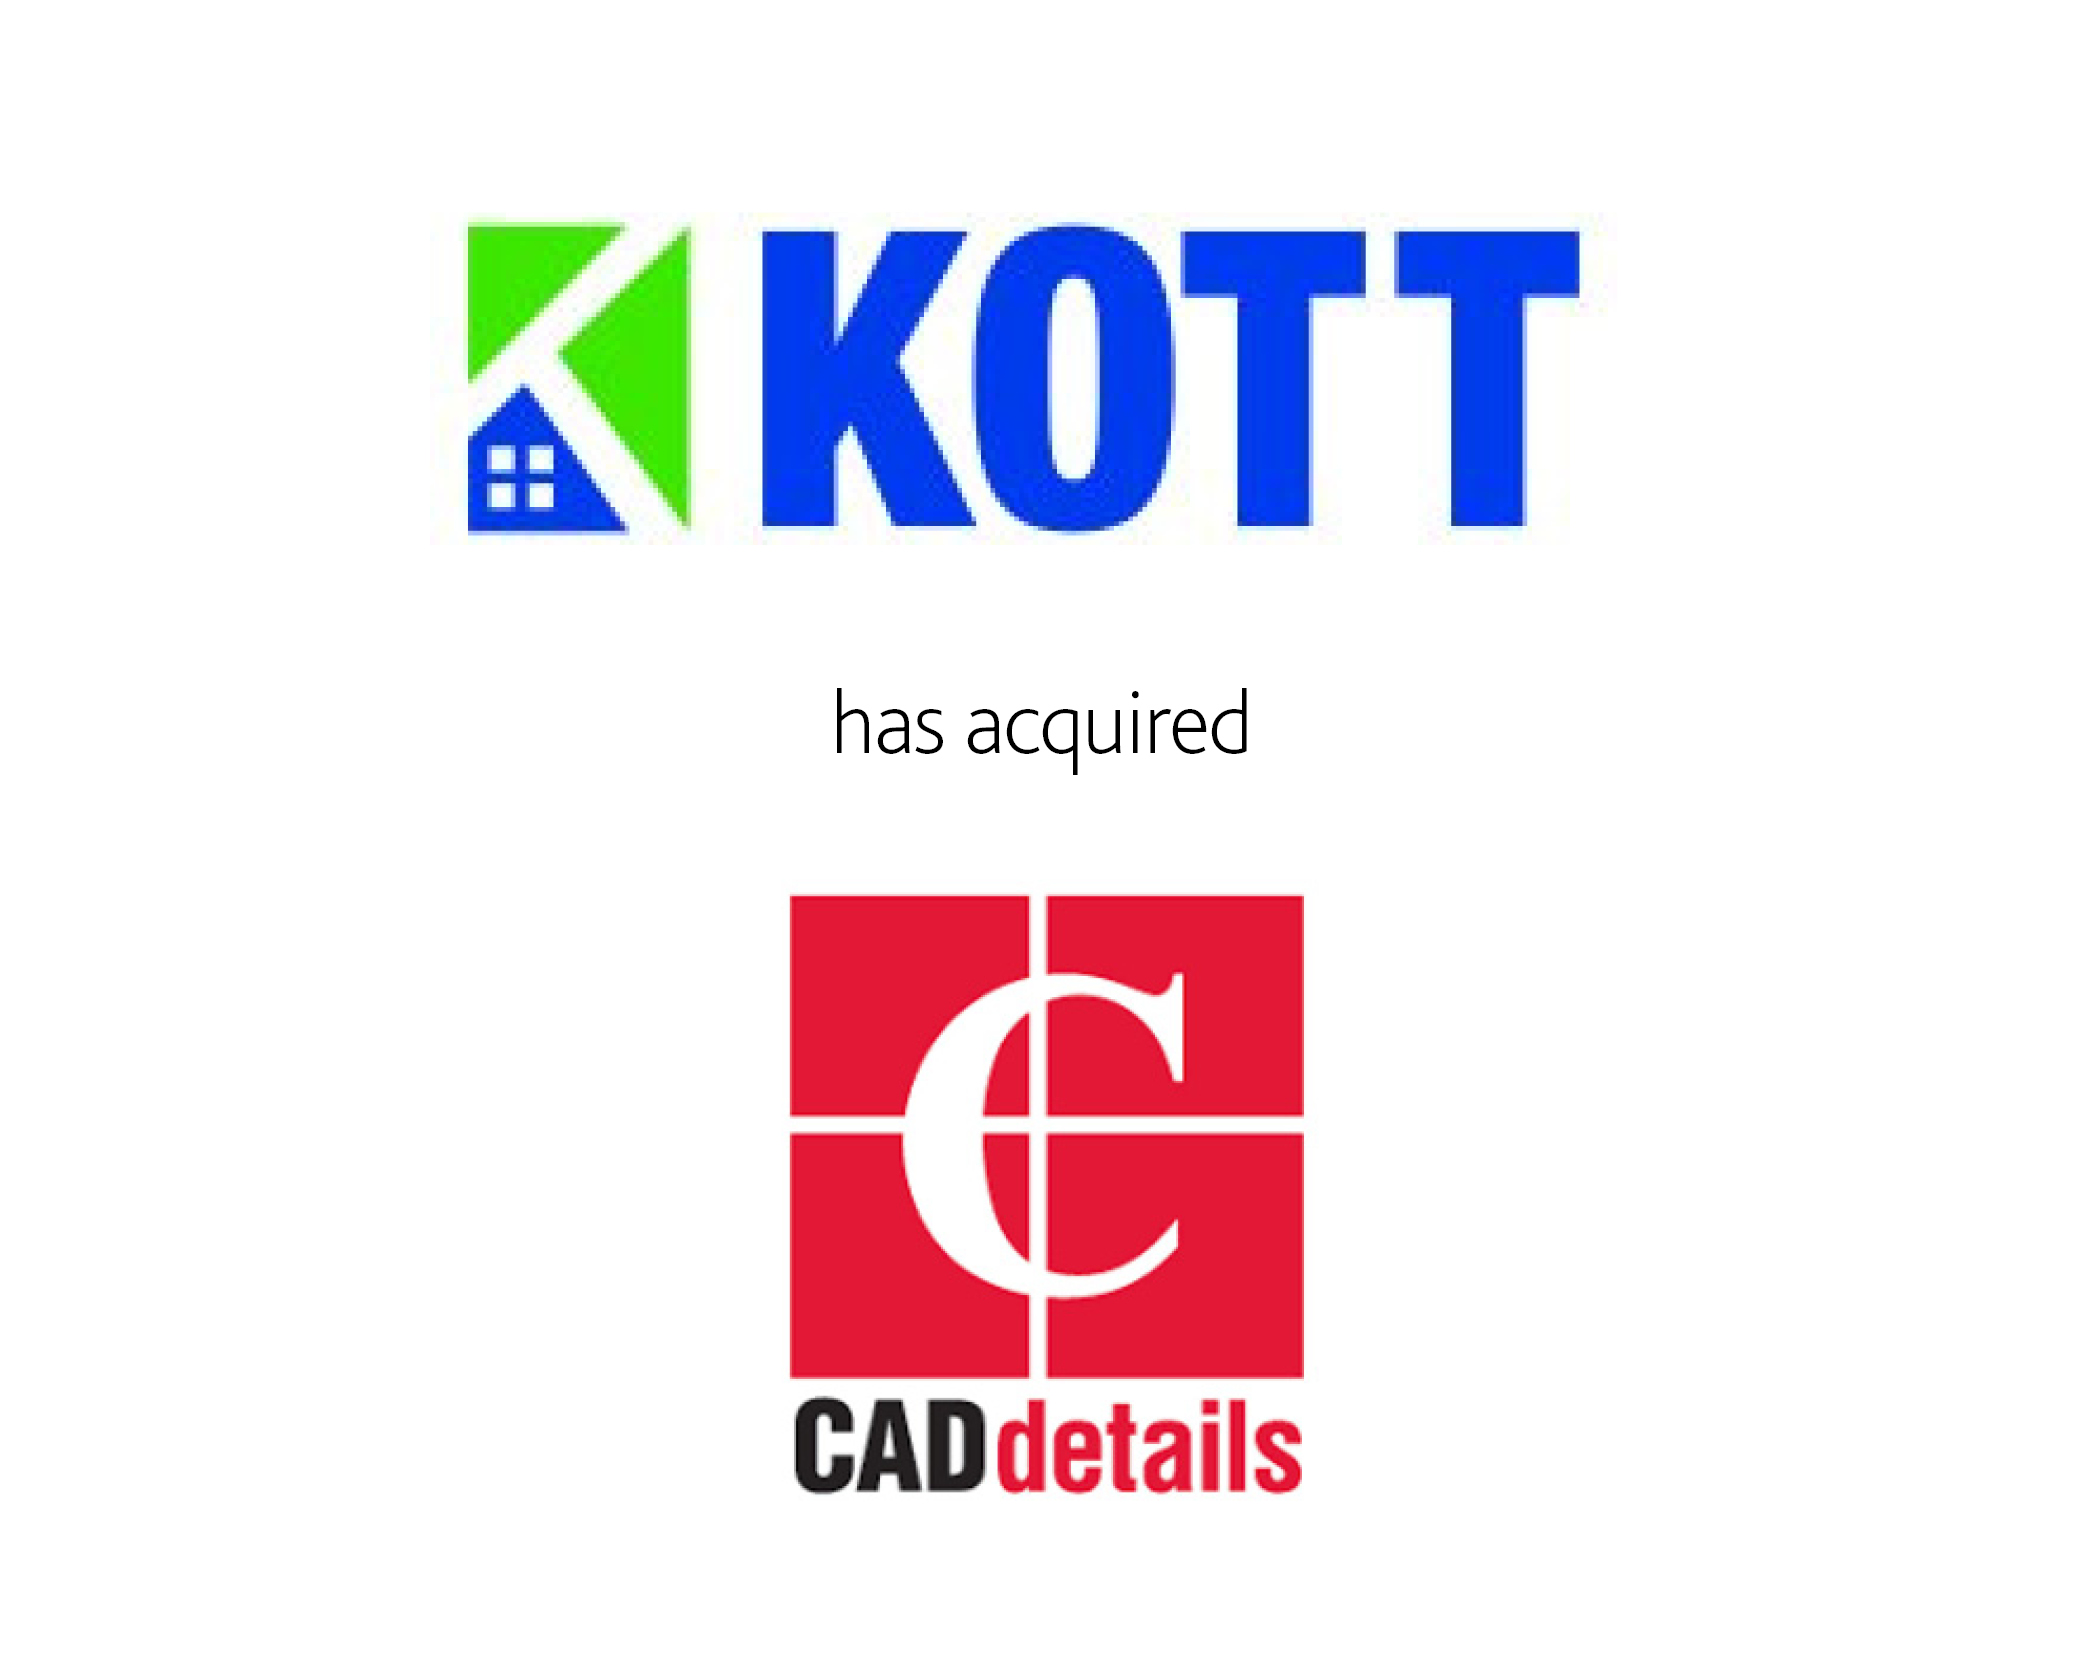 Kott has acquired CADdetails